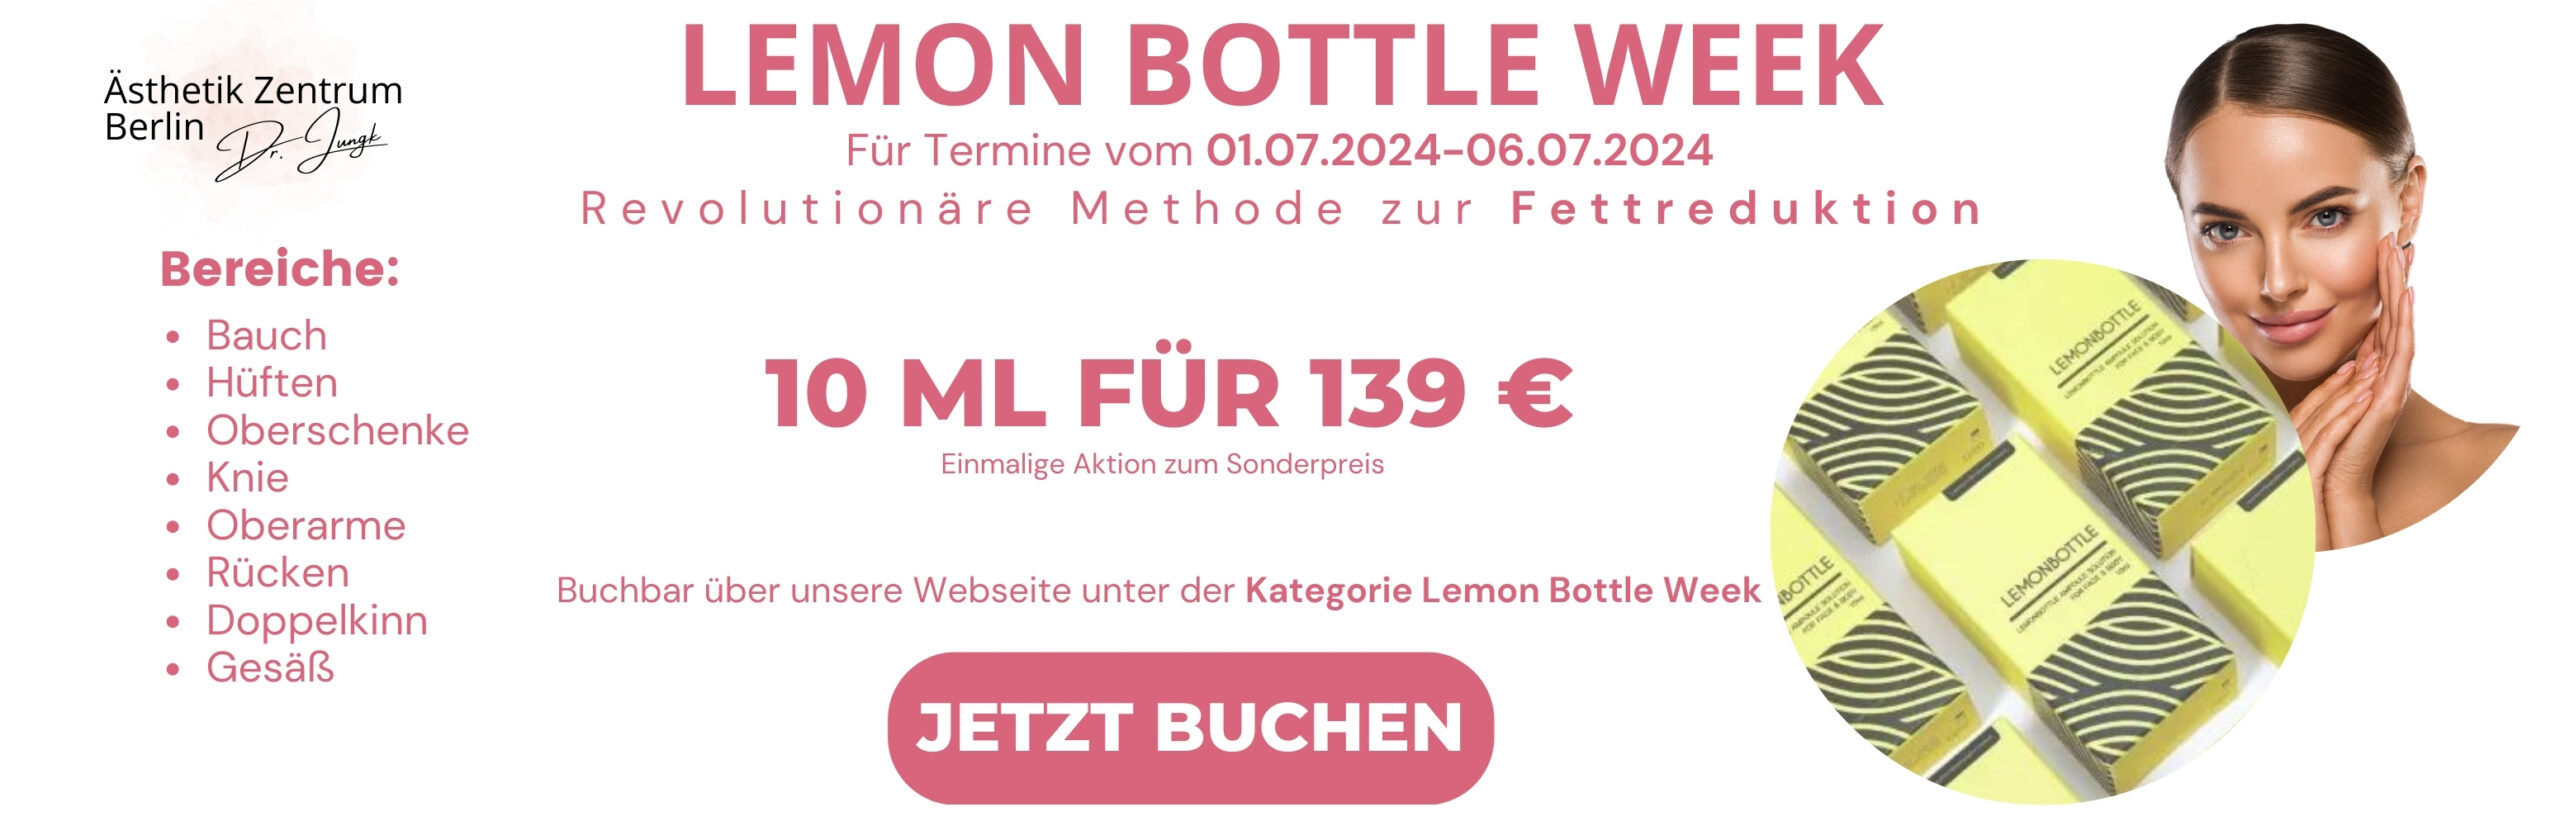 Lemon Bottle Week Angebot